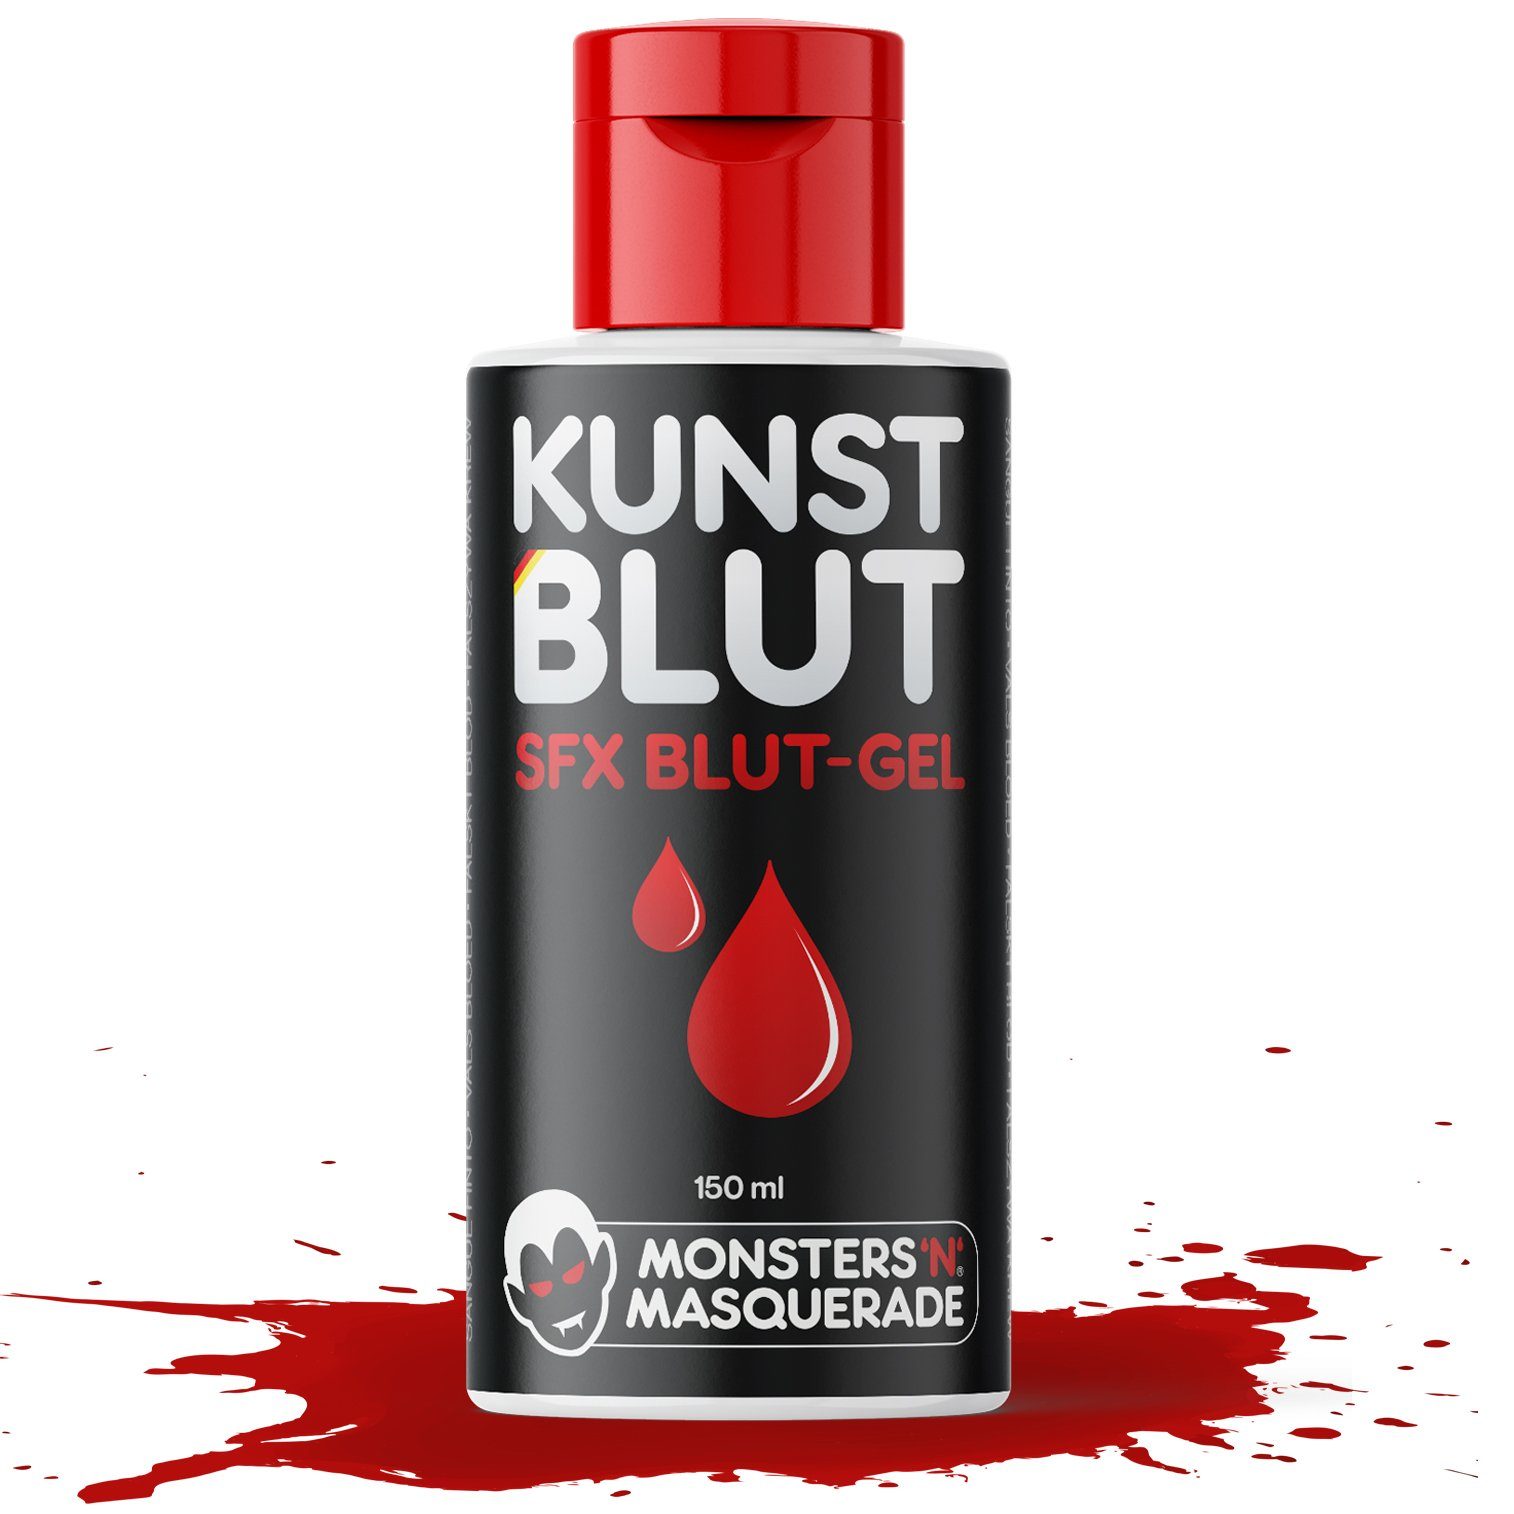 Monsters'n'Masquerade Kostüm Profi Kunstblut 150ml, SFX Blut-Gel, Made in Germany, Theaterblut für Halloween, Karneval, Fasching & Co